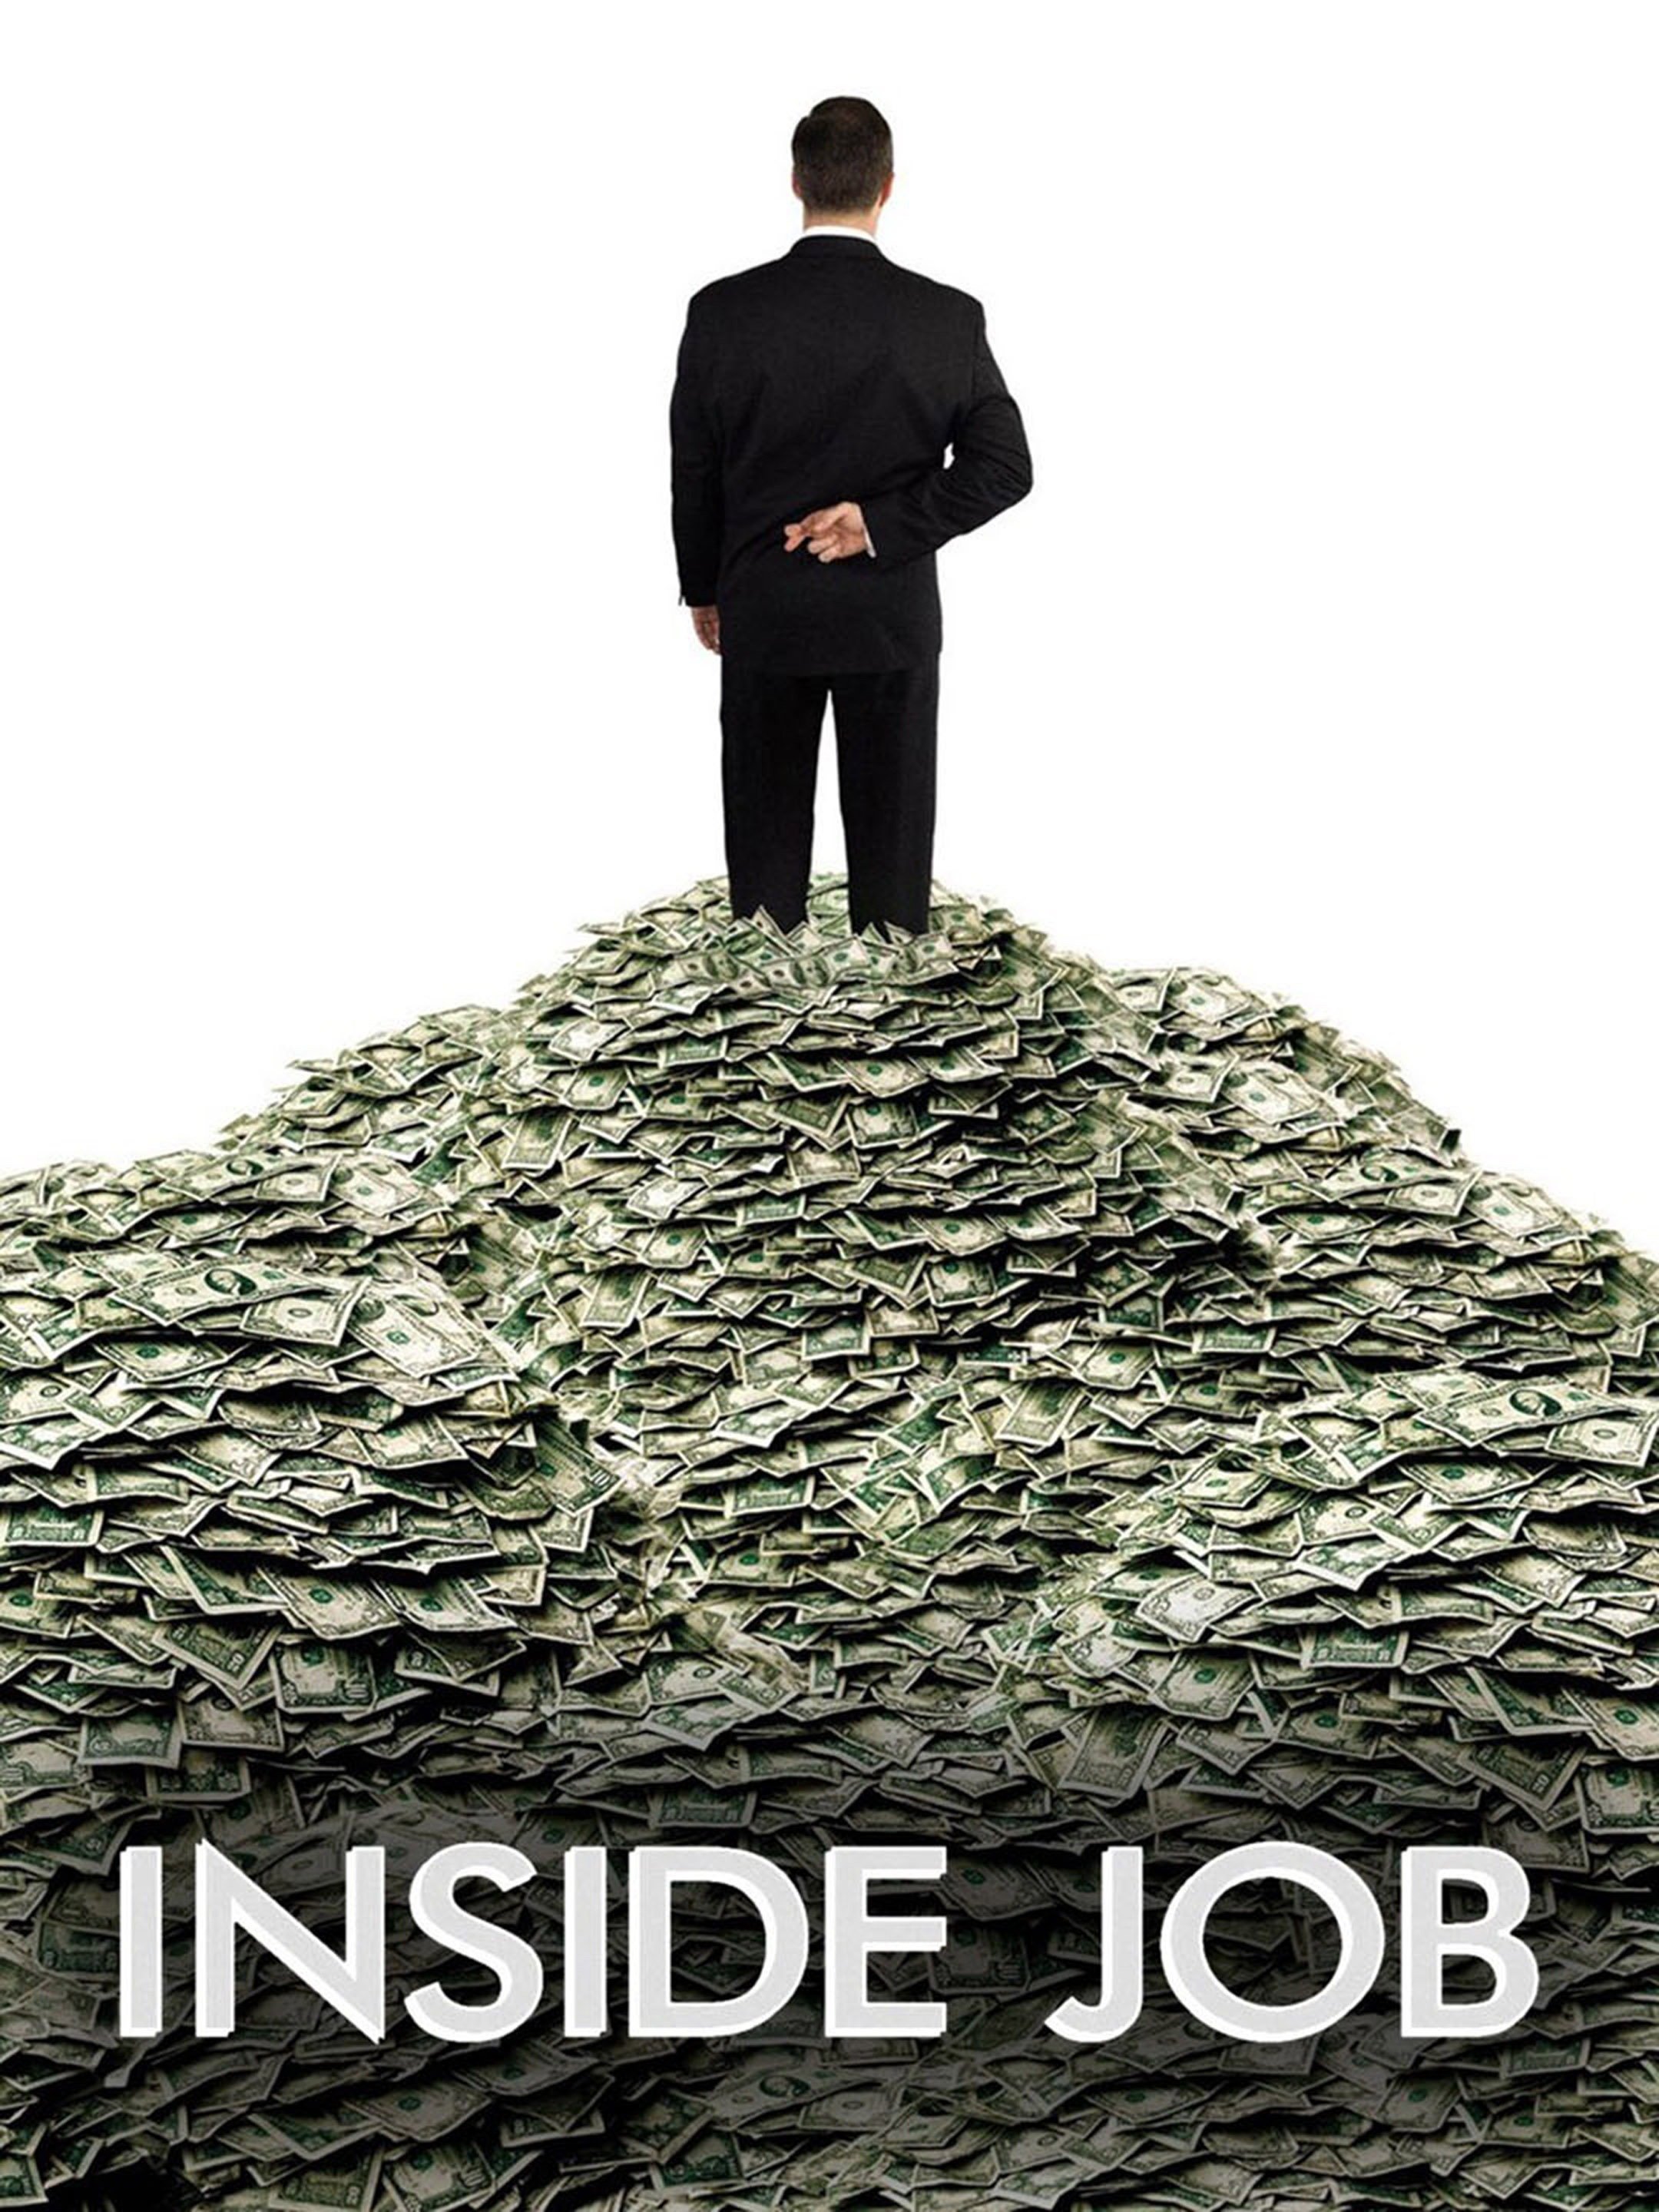 Inside Job (2010) - Rotten Tomatoes